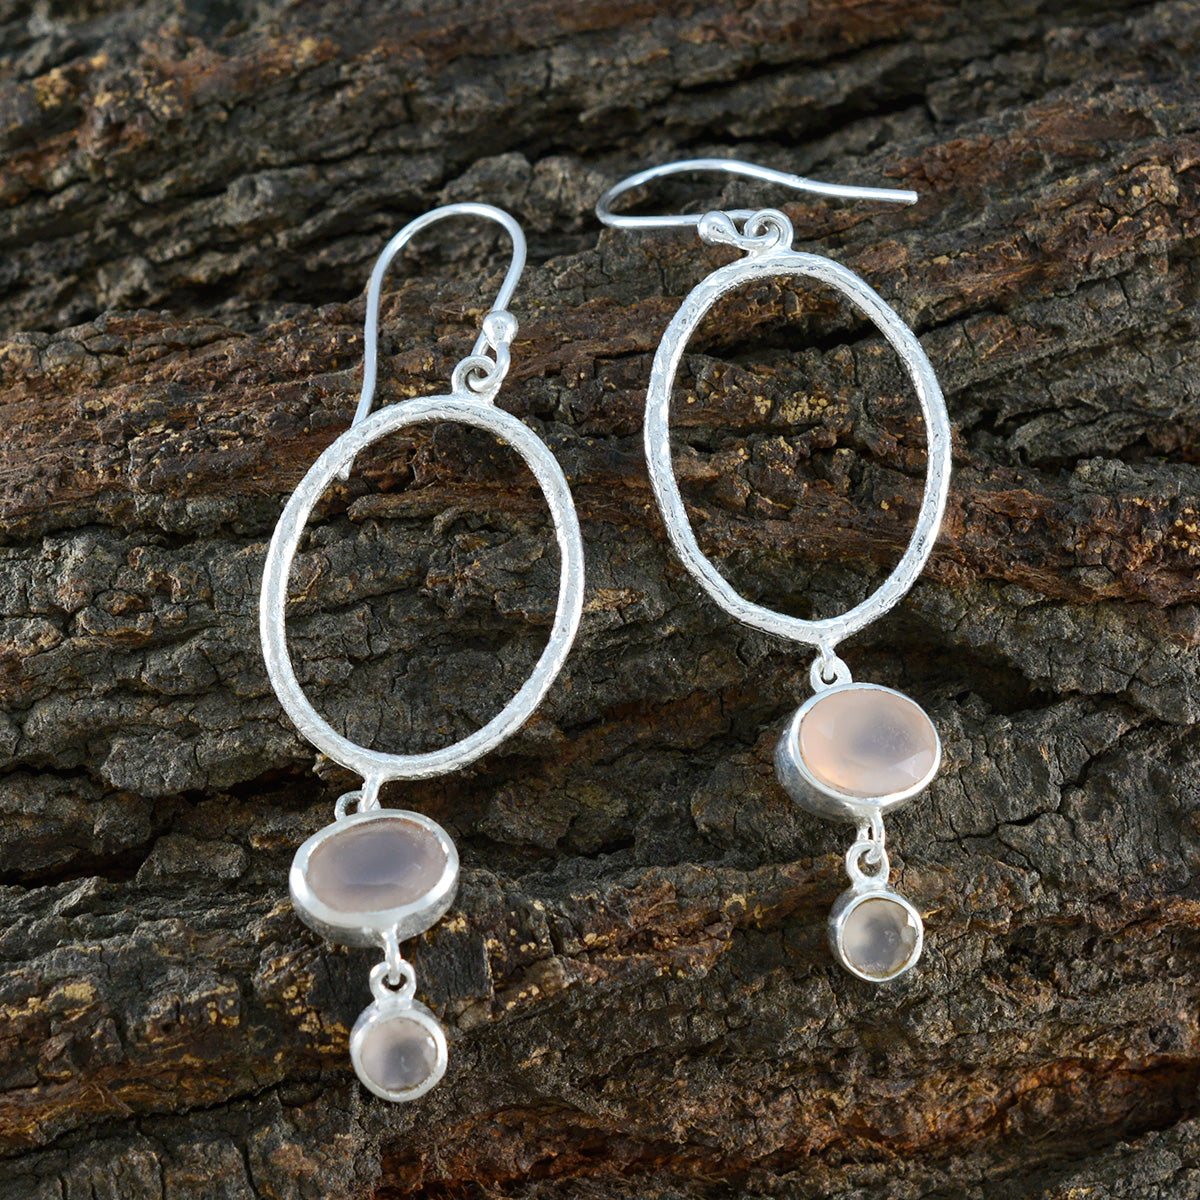 Riyo Delightful 925 Sterling Silver Earring For Demoiselle Rose Quartz Earring Bezel Setting Pink Earring Dangle Earring